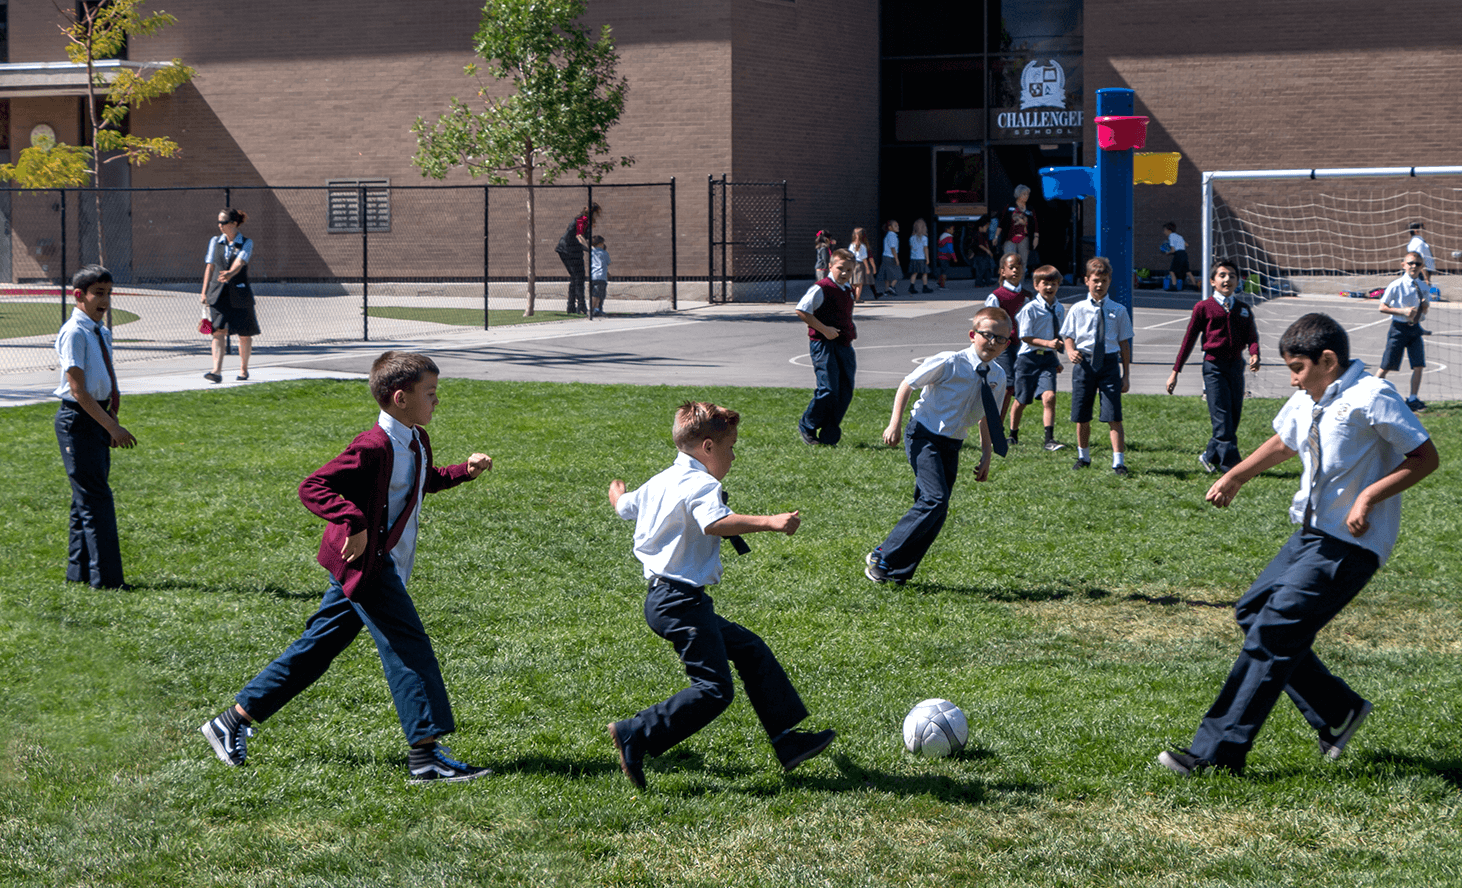 Elementary School Playground | Challenger School - Salt Lake | Private School In Salt Lake City, Utah